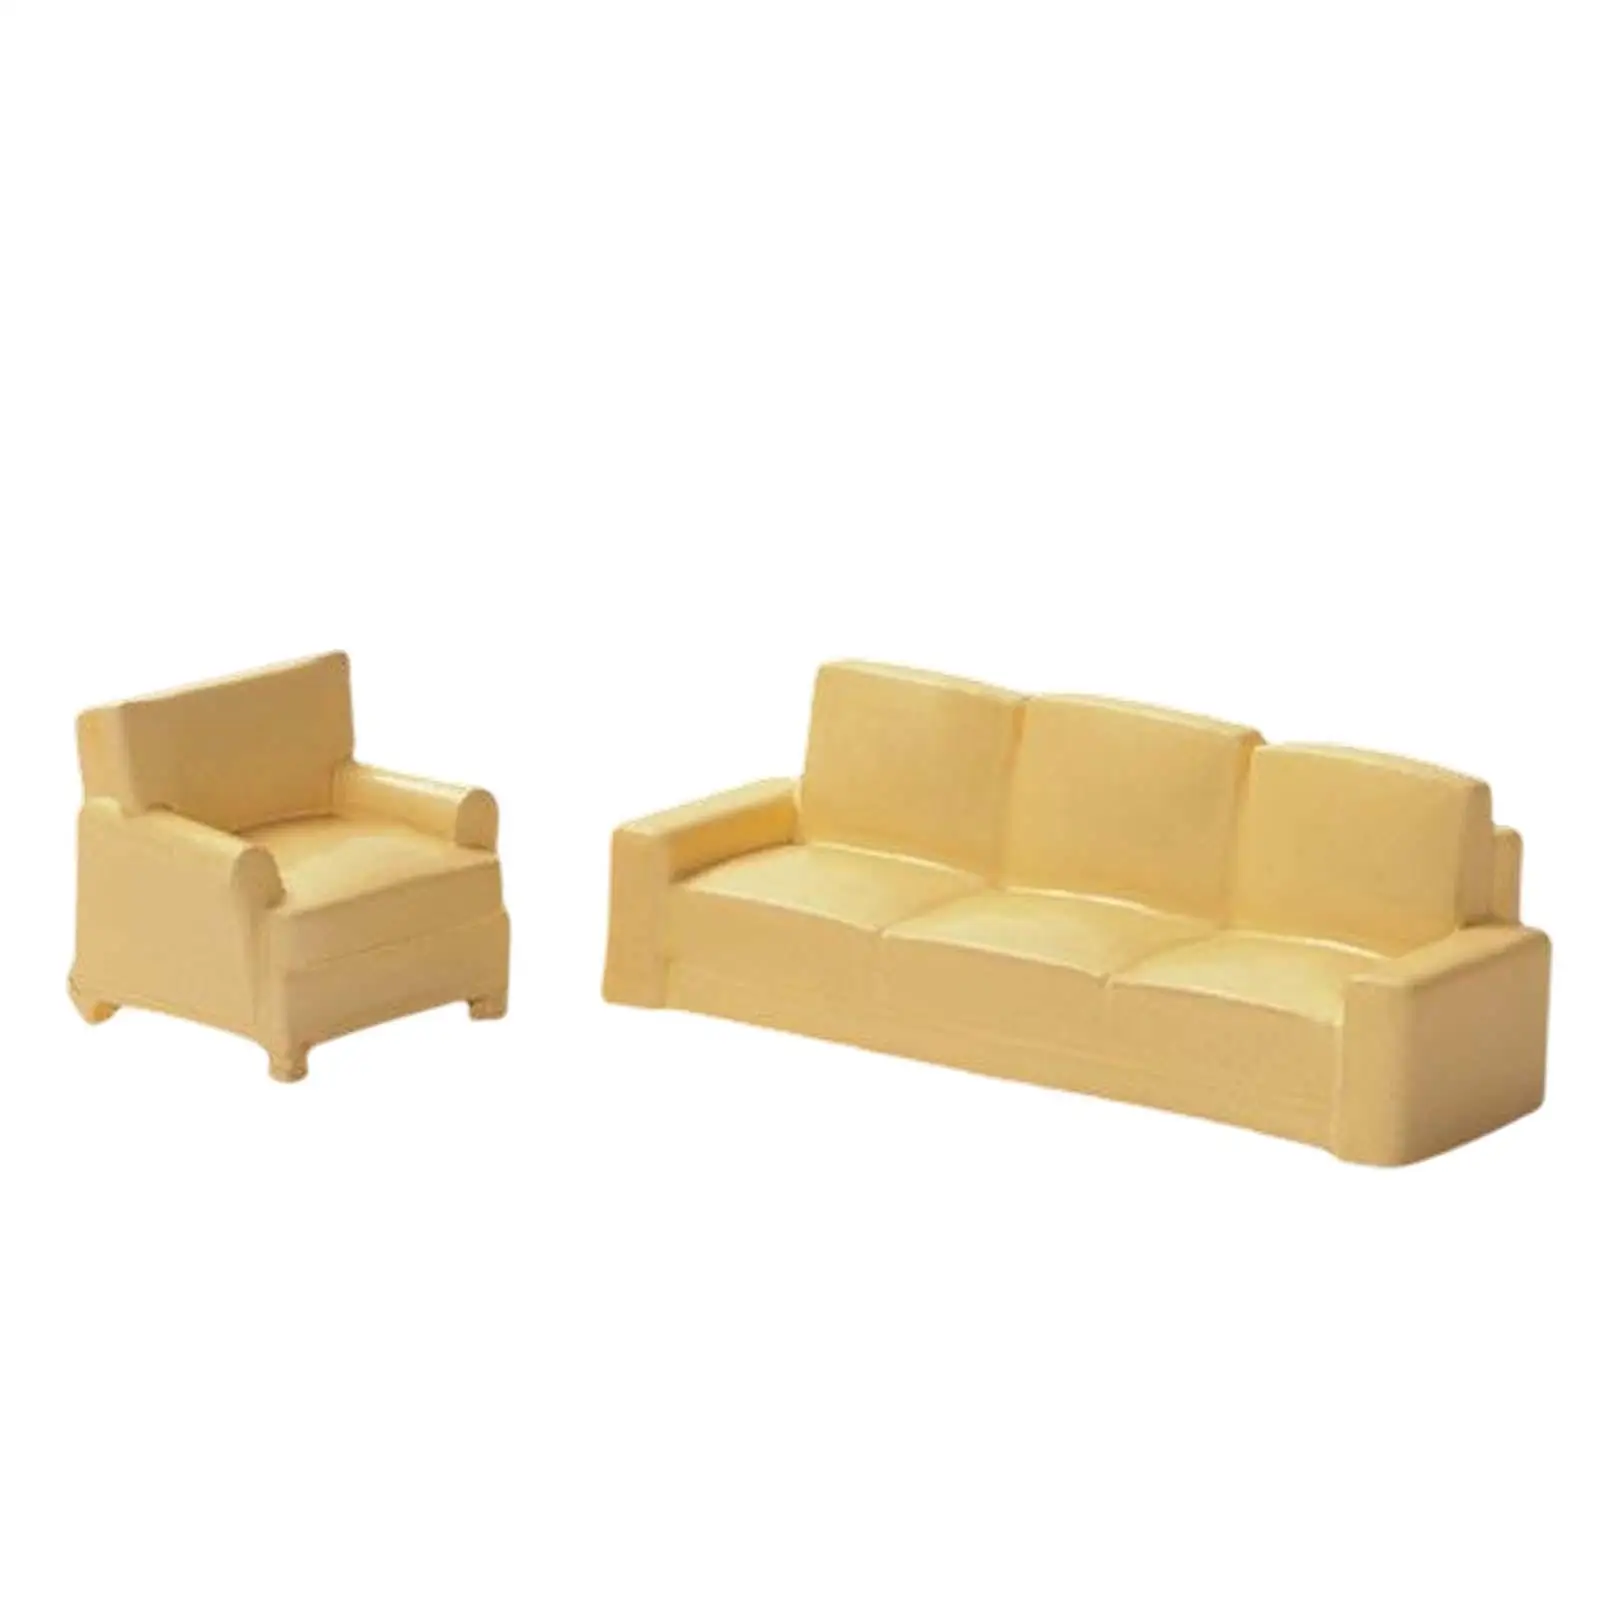 2x Dollhouse Sofa Couch, Handcraft Dollhouse Furnishings, Simulation Mini Furniture for 1/64 Dollhouse Diorama